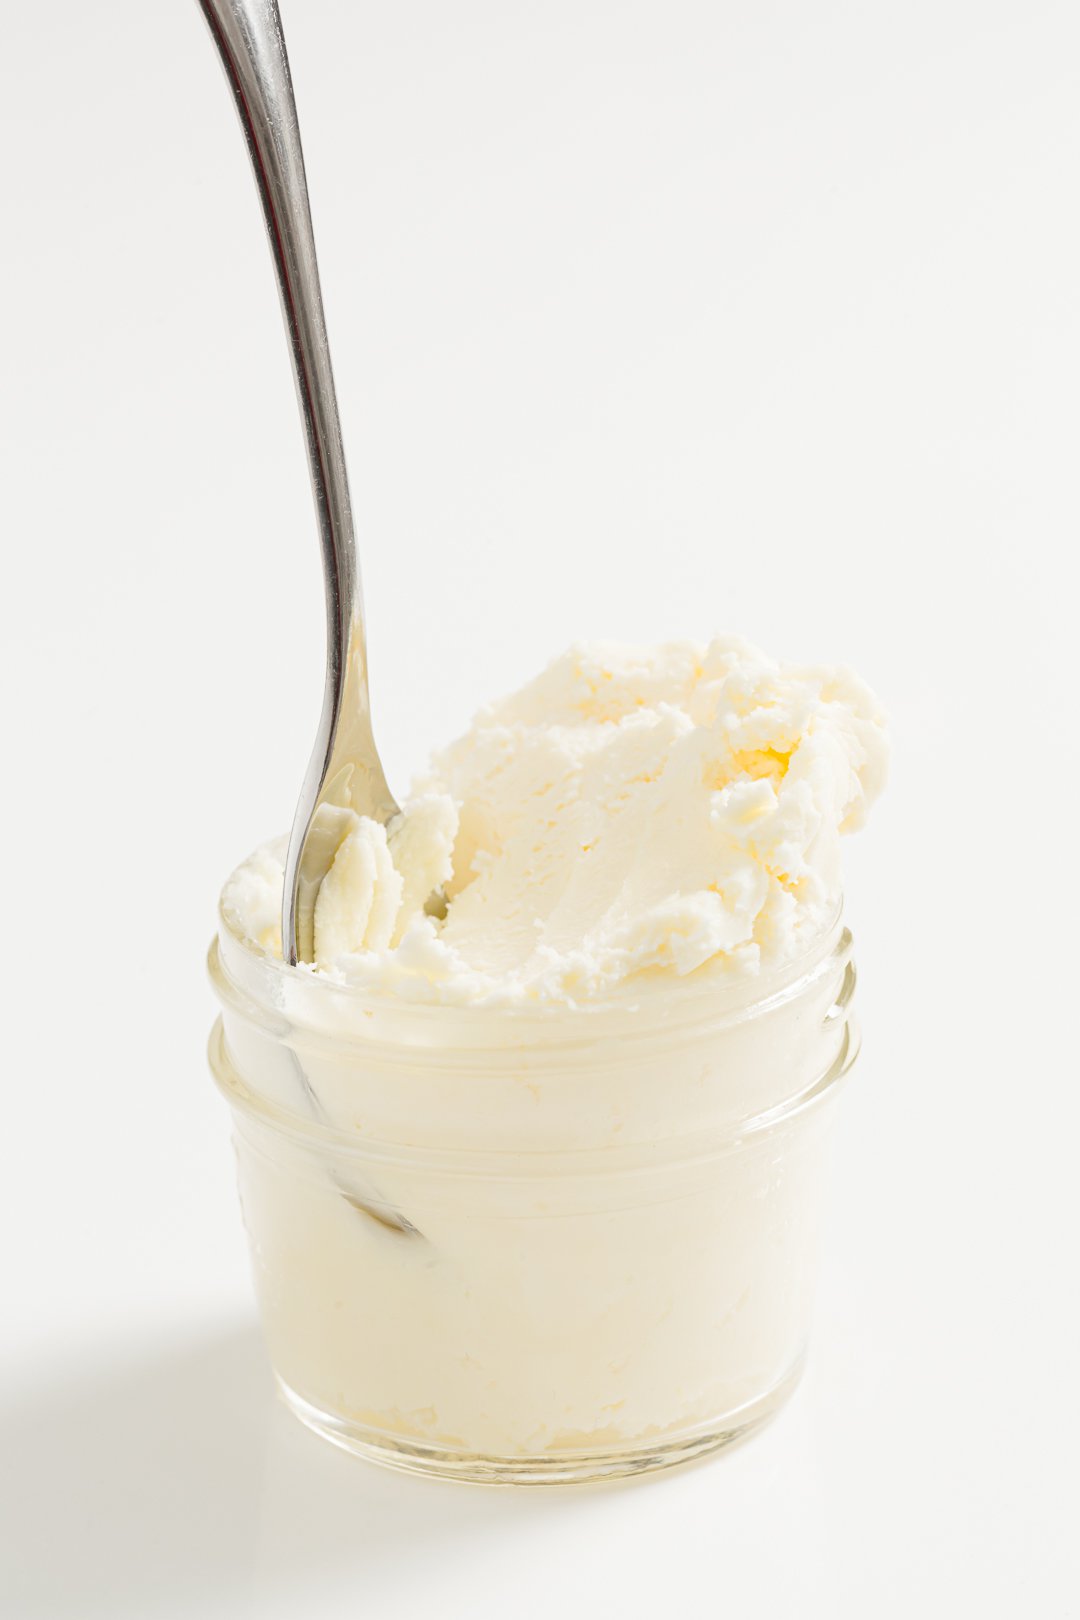 Easy Homemade Clotted Cream Recipe - How to Make Clotted Cream